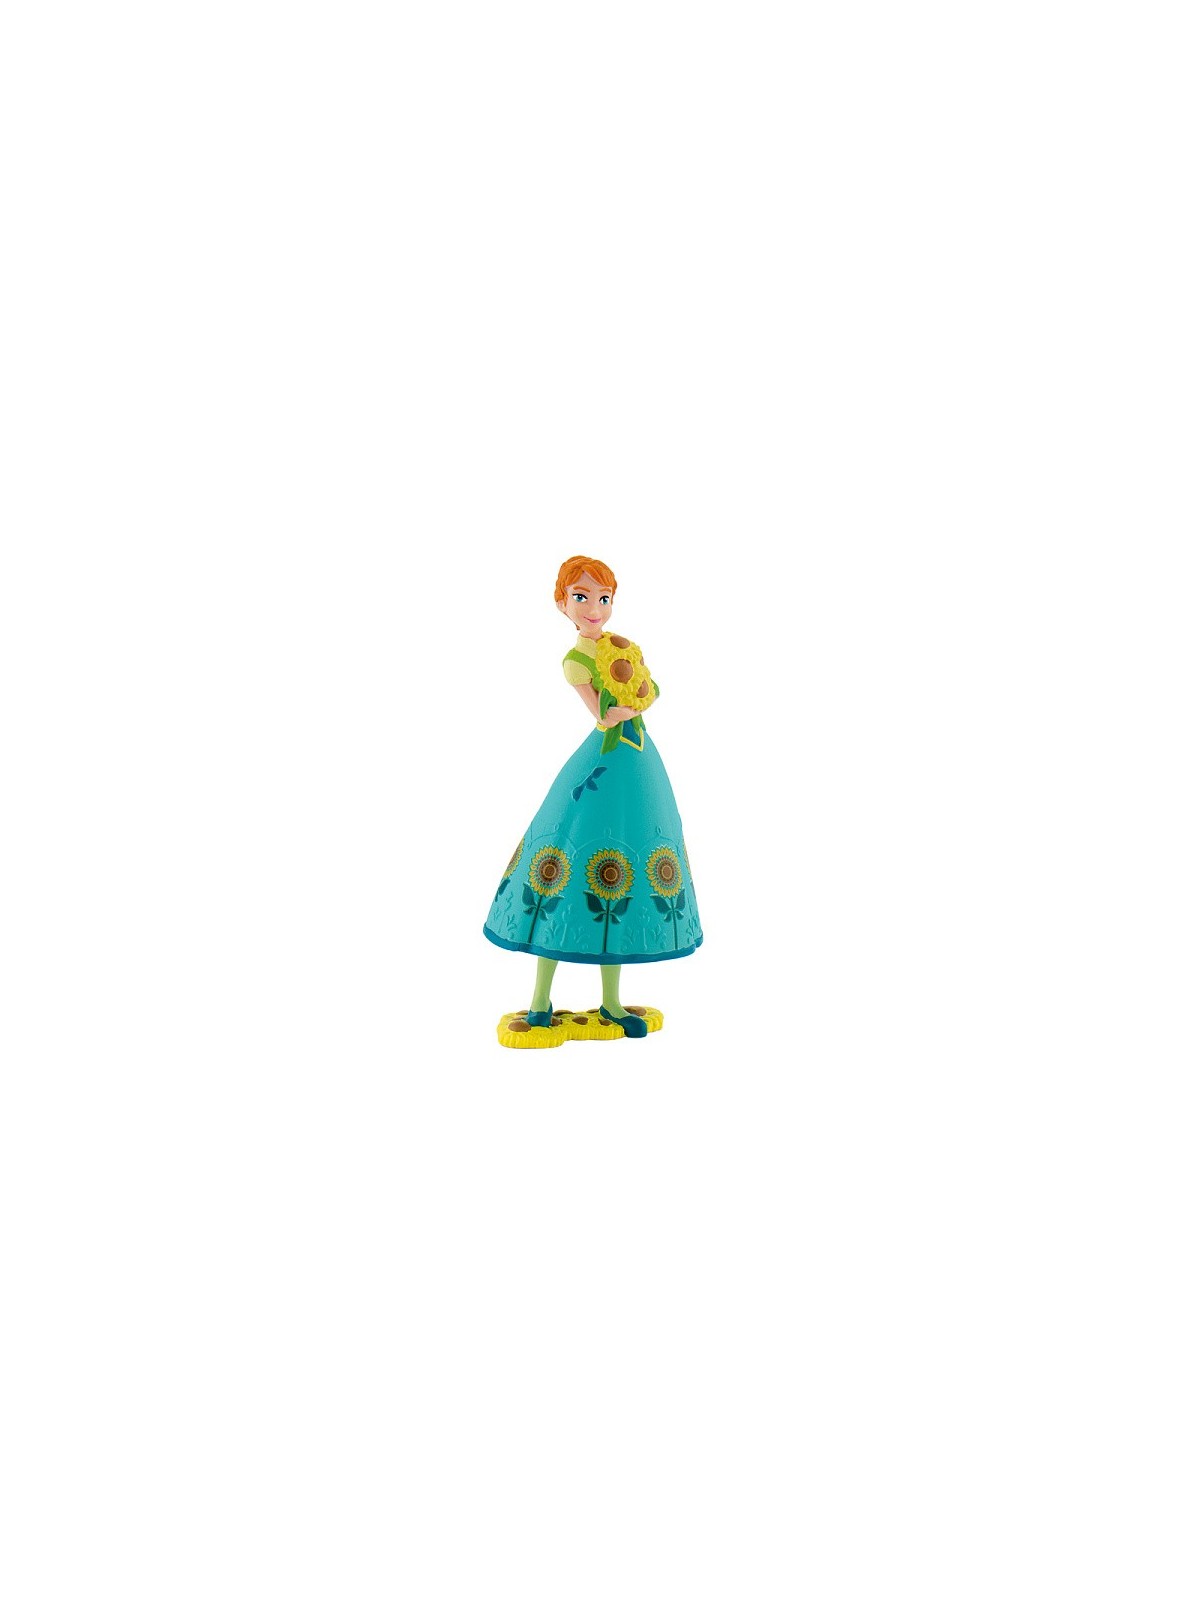 Disney Figure - Frozen - Anna  - green